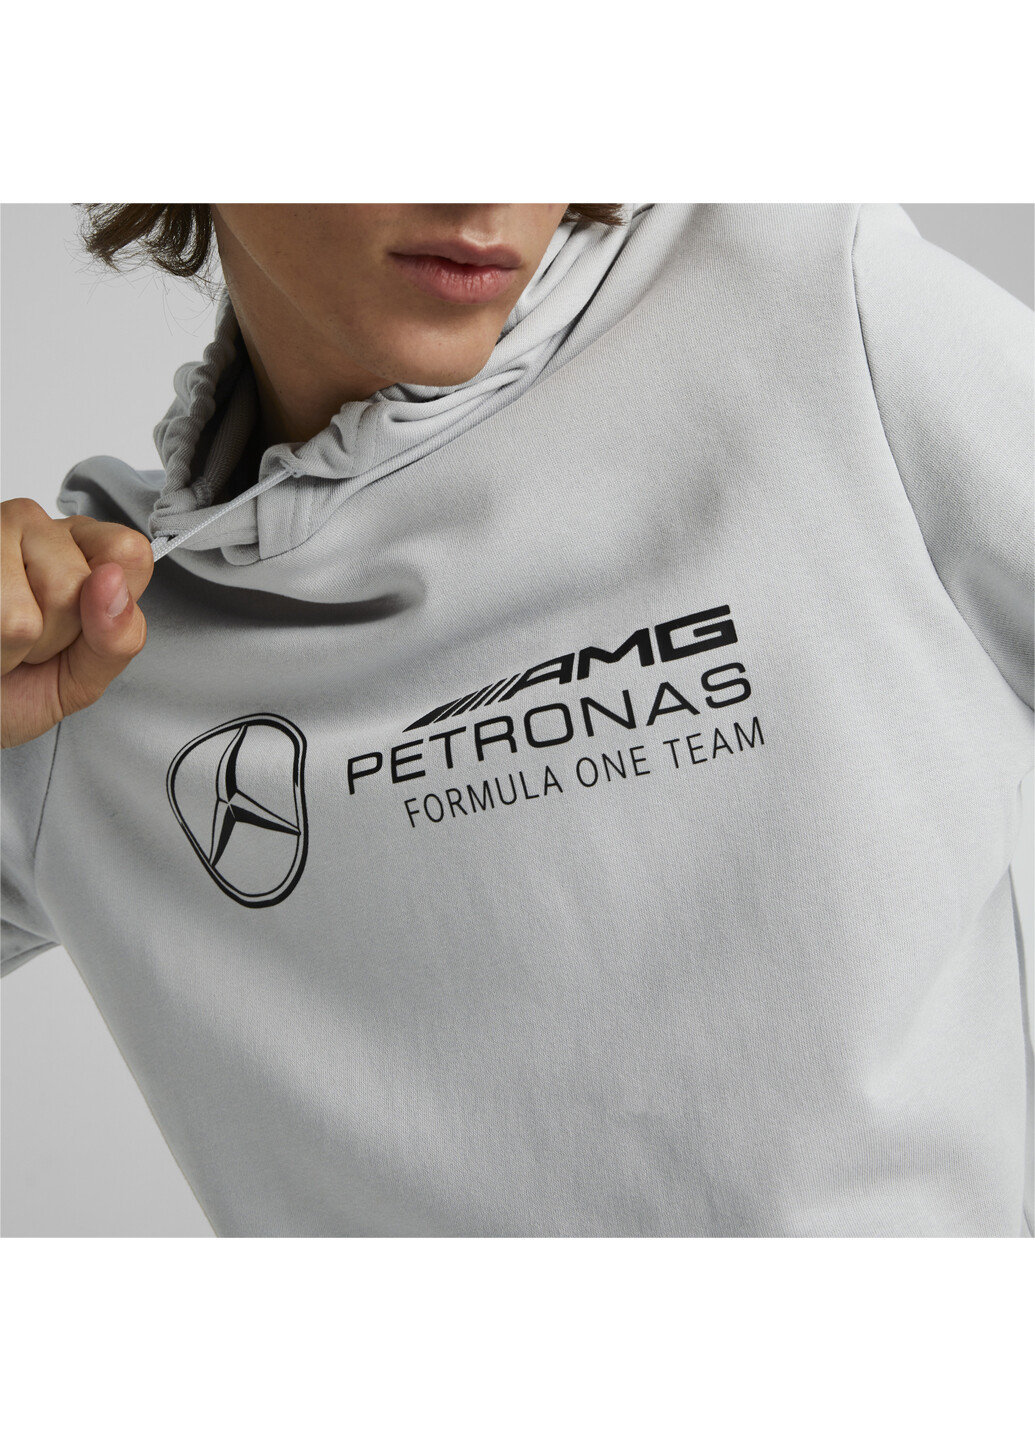 Худі Mercedes-AMG Petronas Motorsport F1 Essentials Hoodie Men Puma однотонна сіра спортивна бавовна, поліестер, еластан